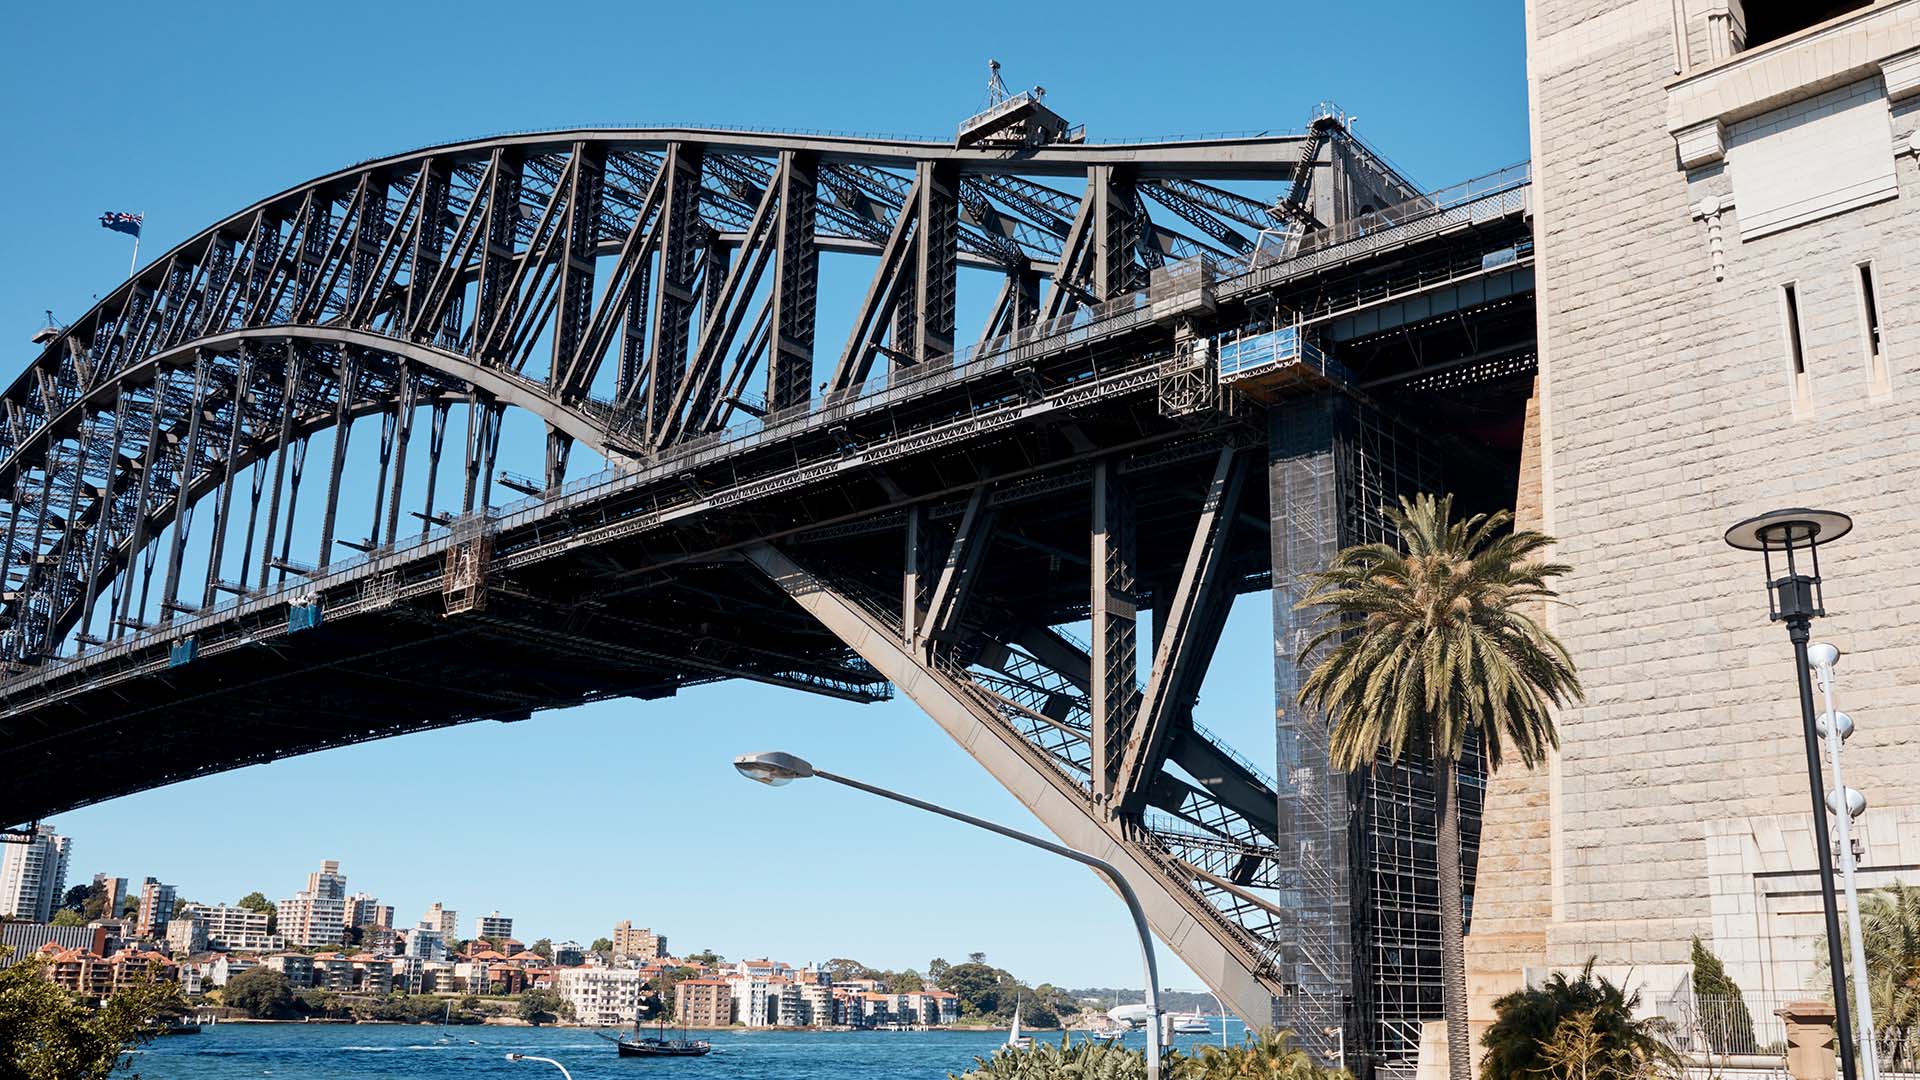 View of a bridge in Sydney, Australia